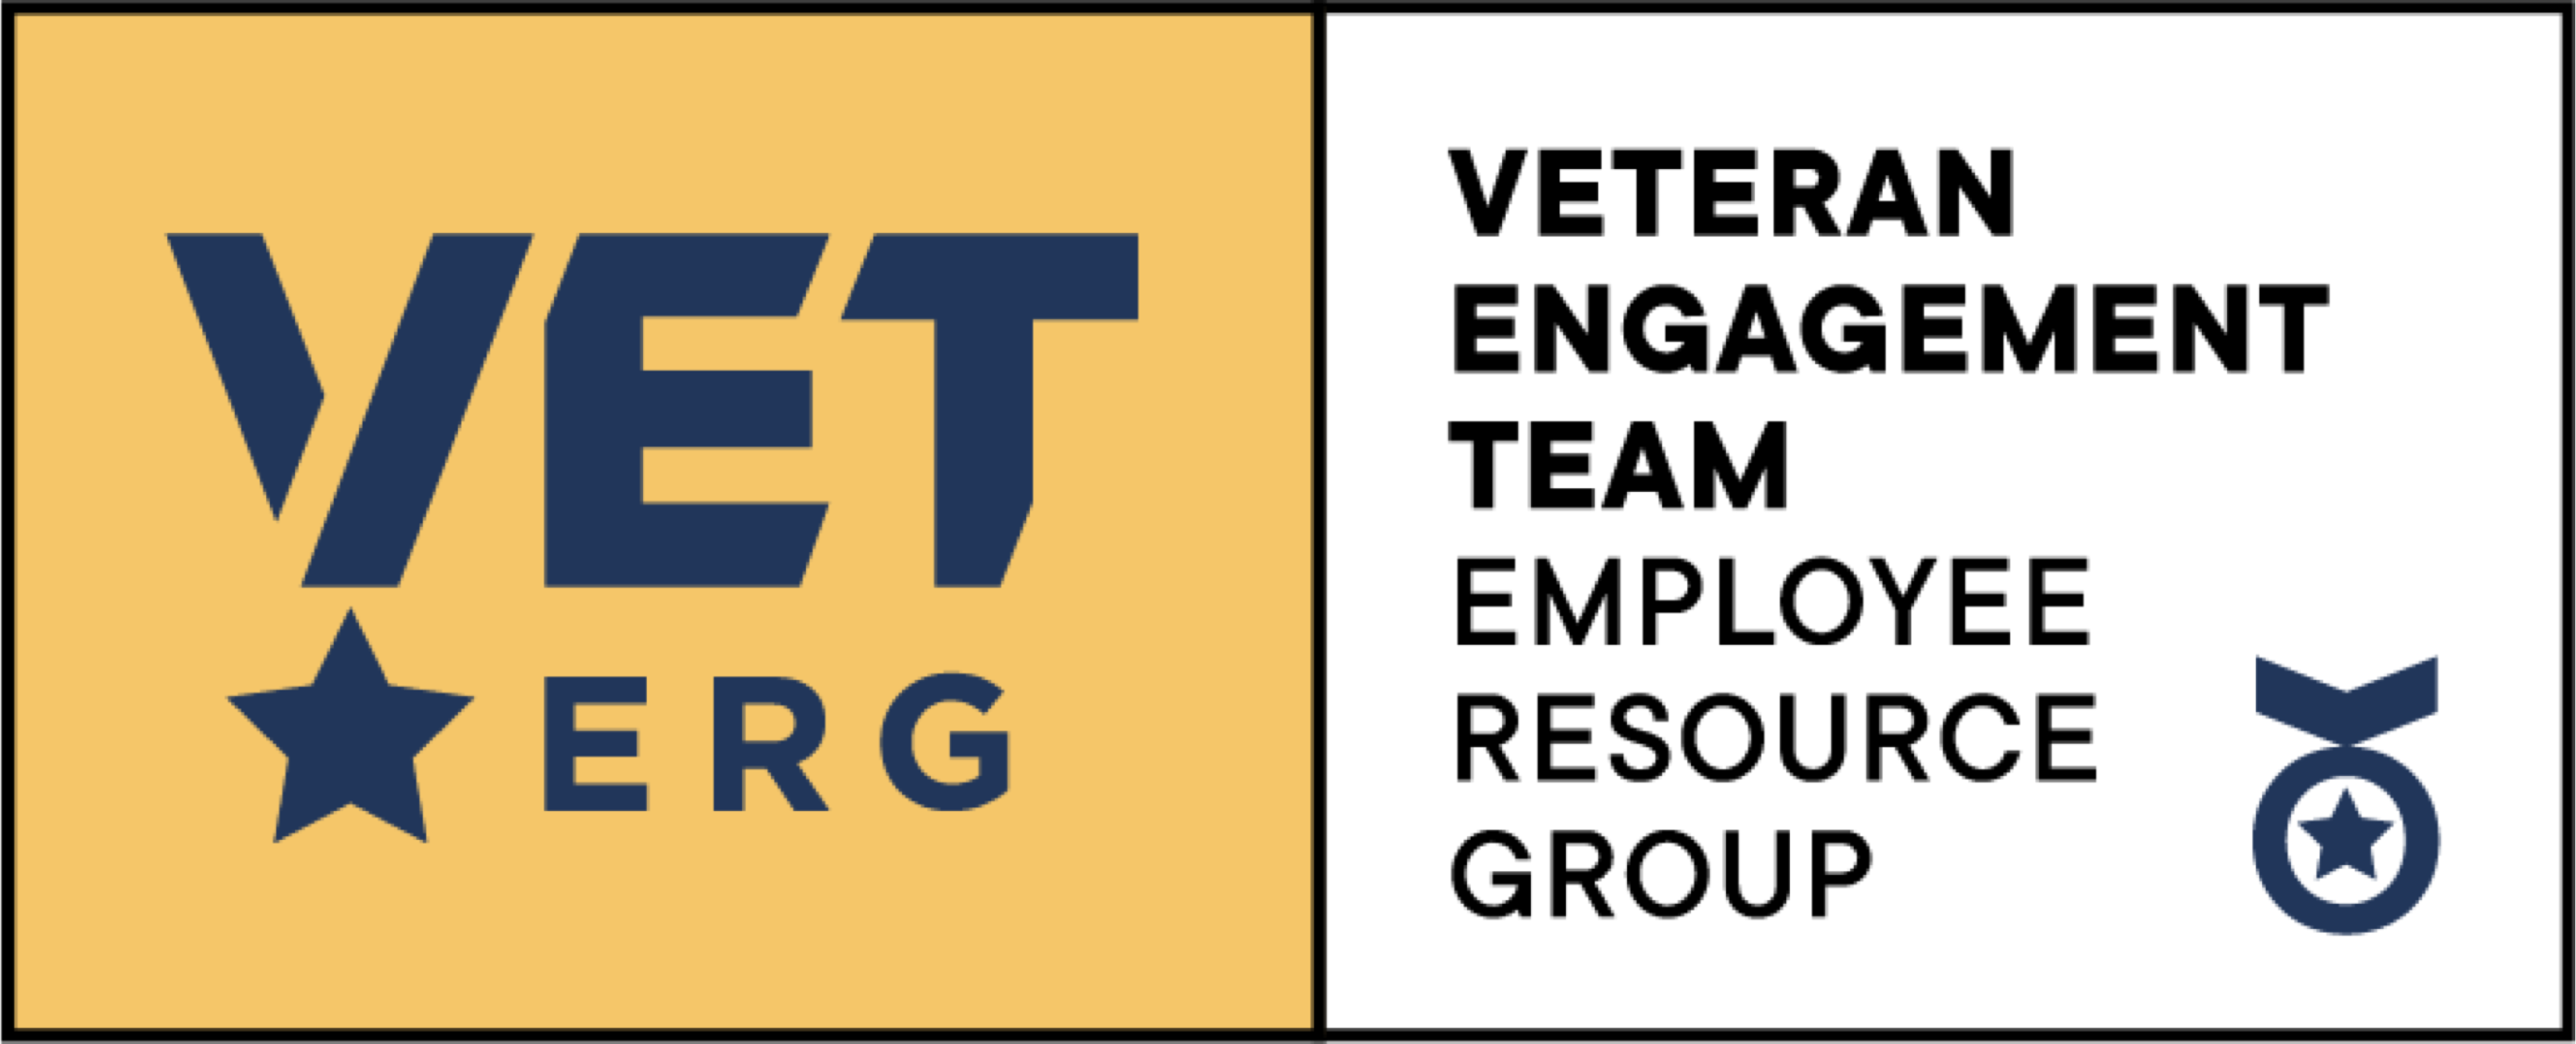 Veteran Engagement Team Employee Resource Group logo.